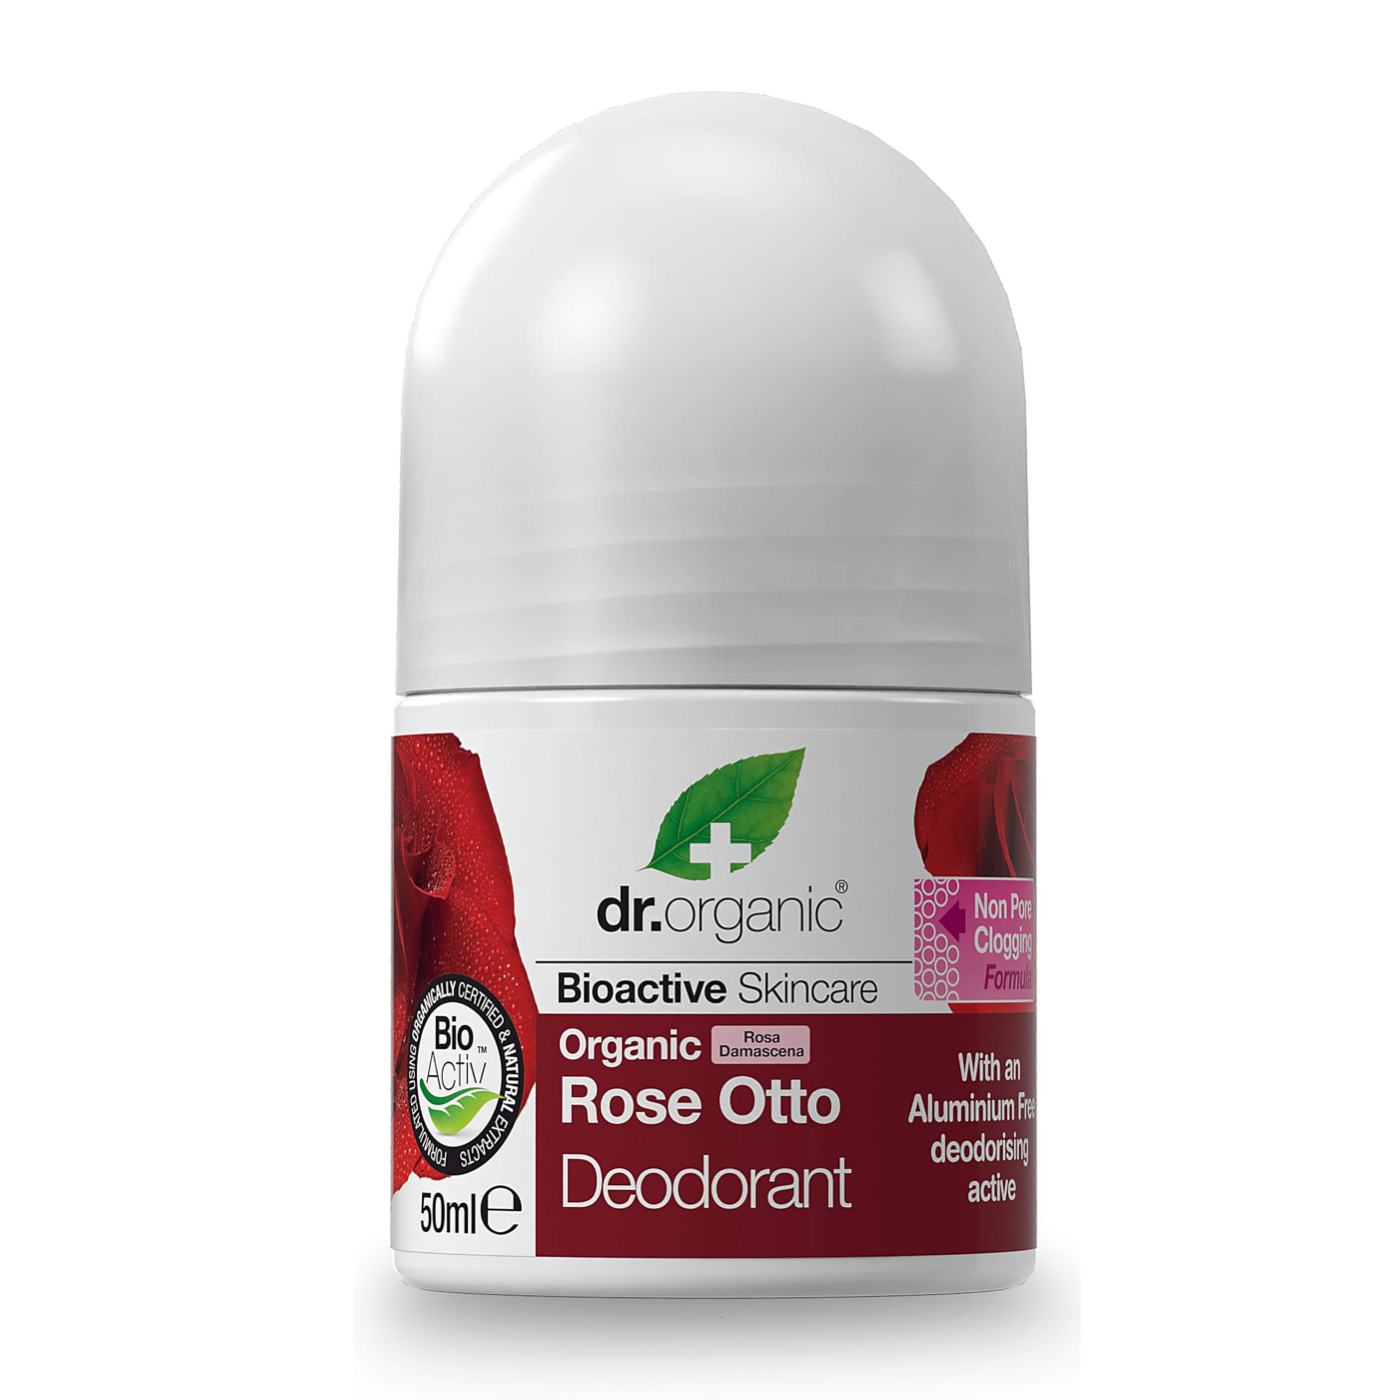 Dr Organic Roll-on Deodorant 50ml, Organic Rose Otto